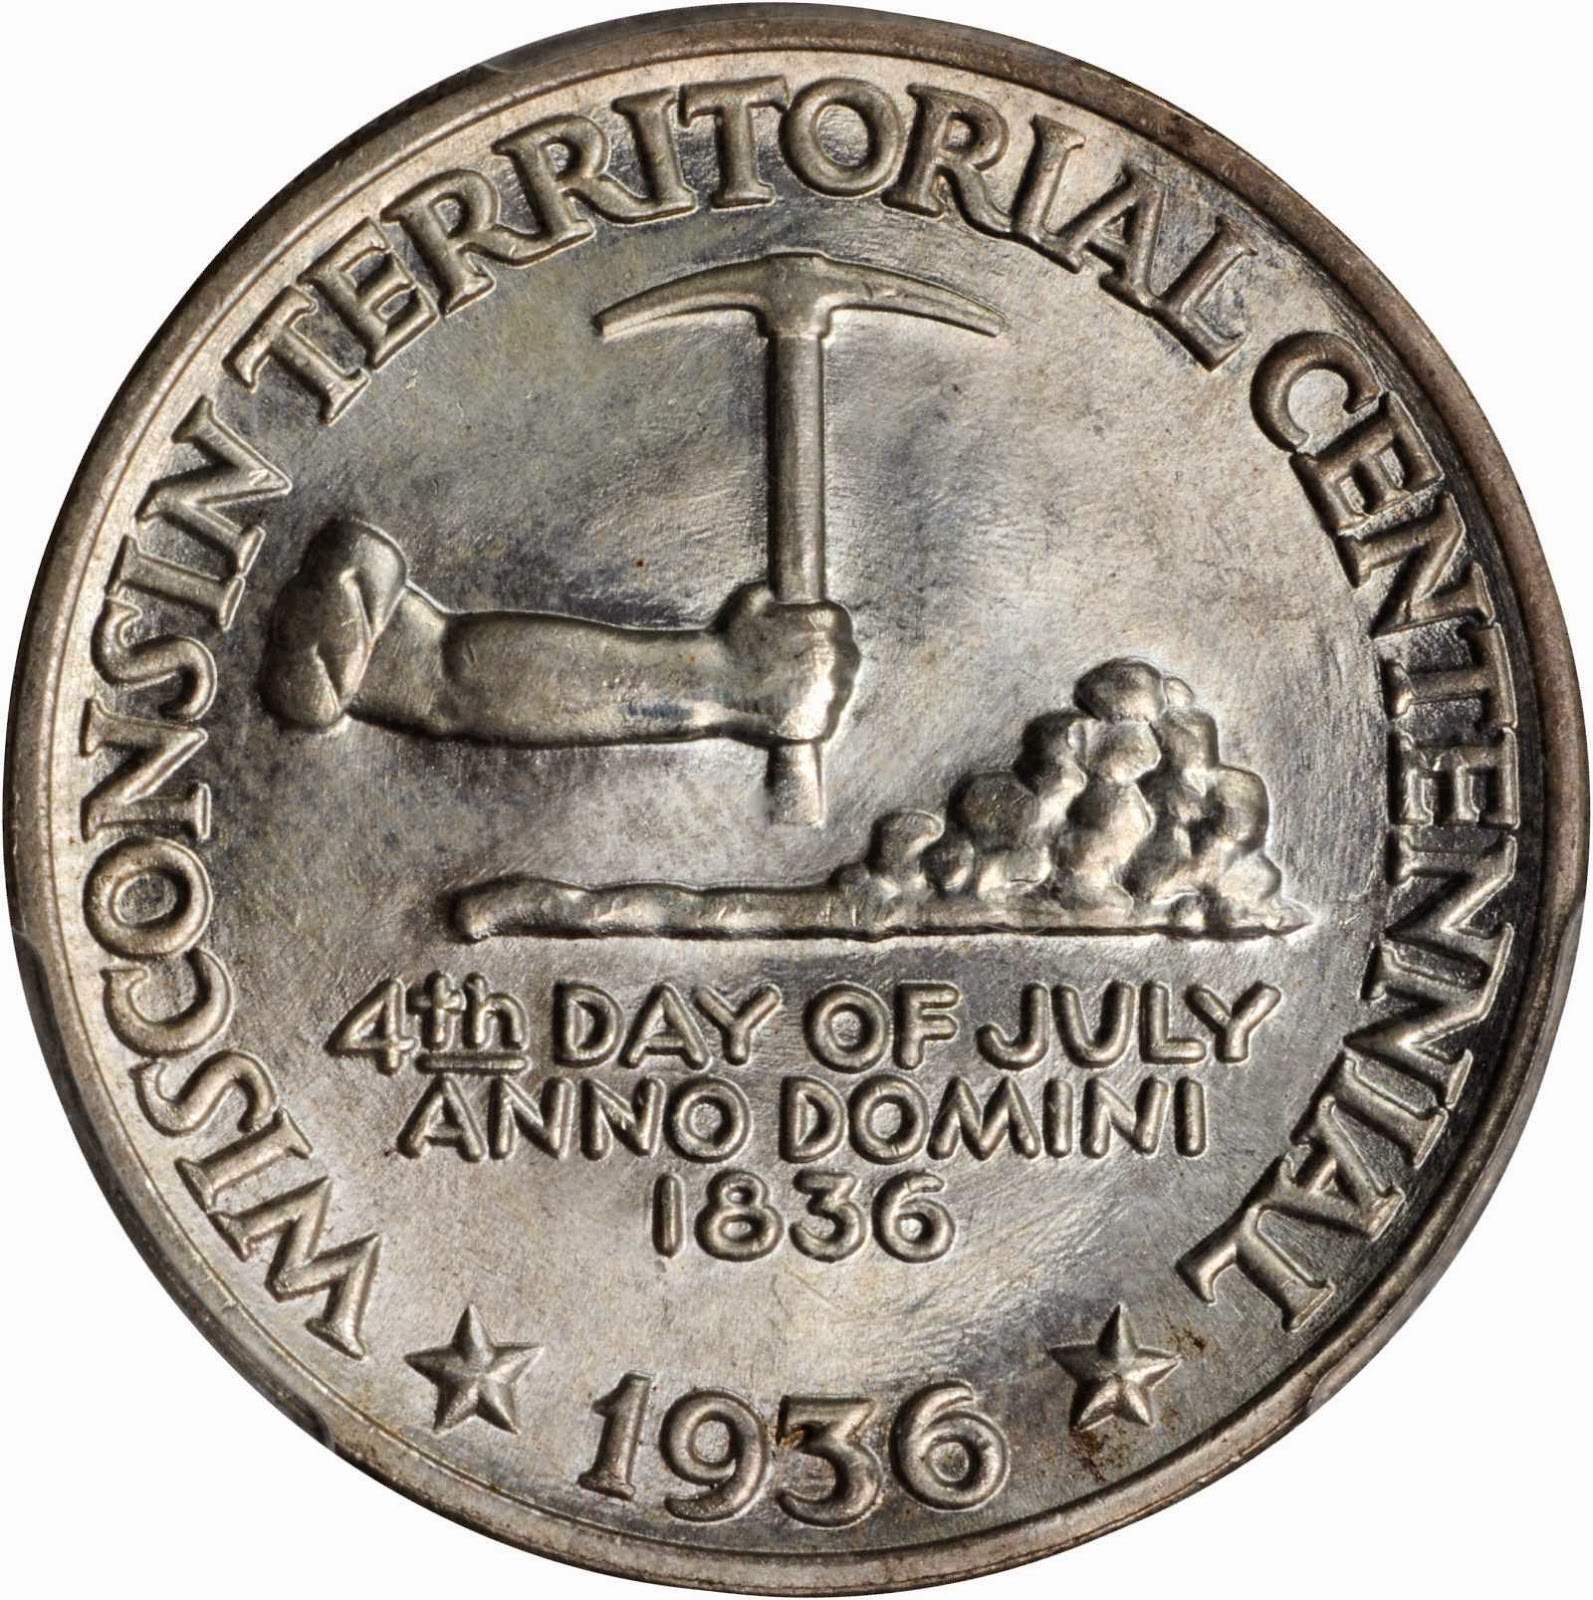 1936 Wisconsin Territorial Centennial Half Dollar